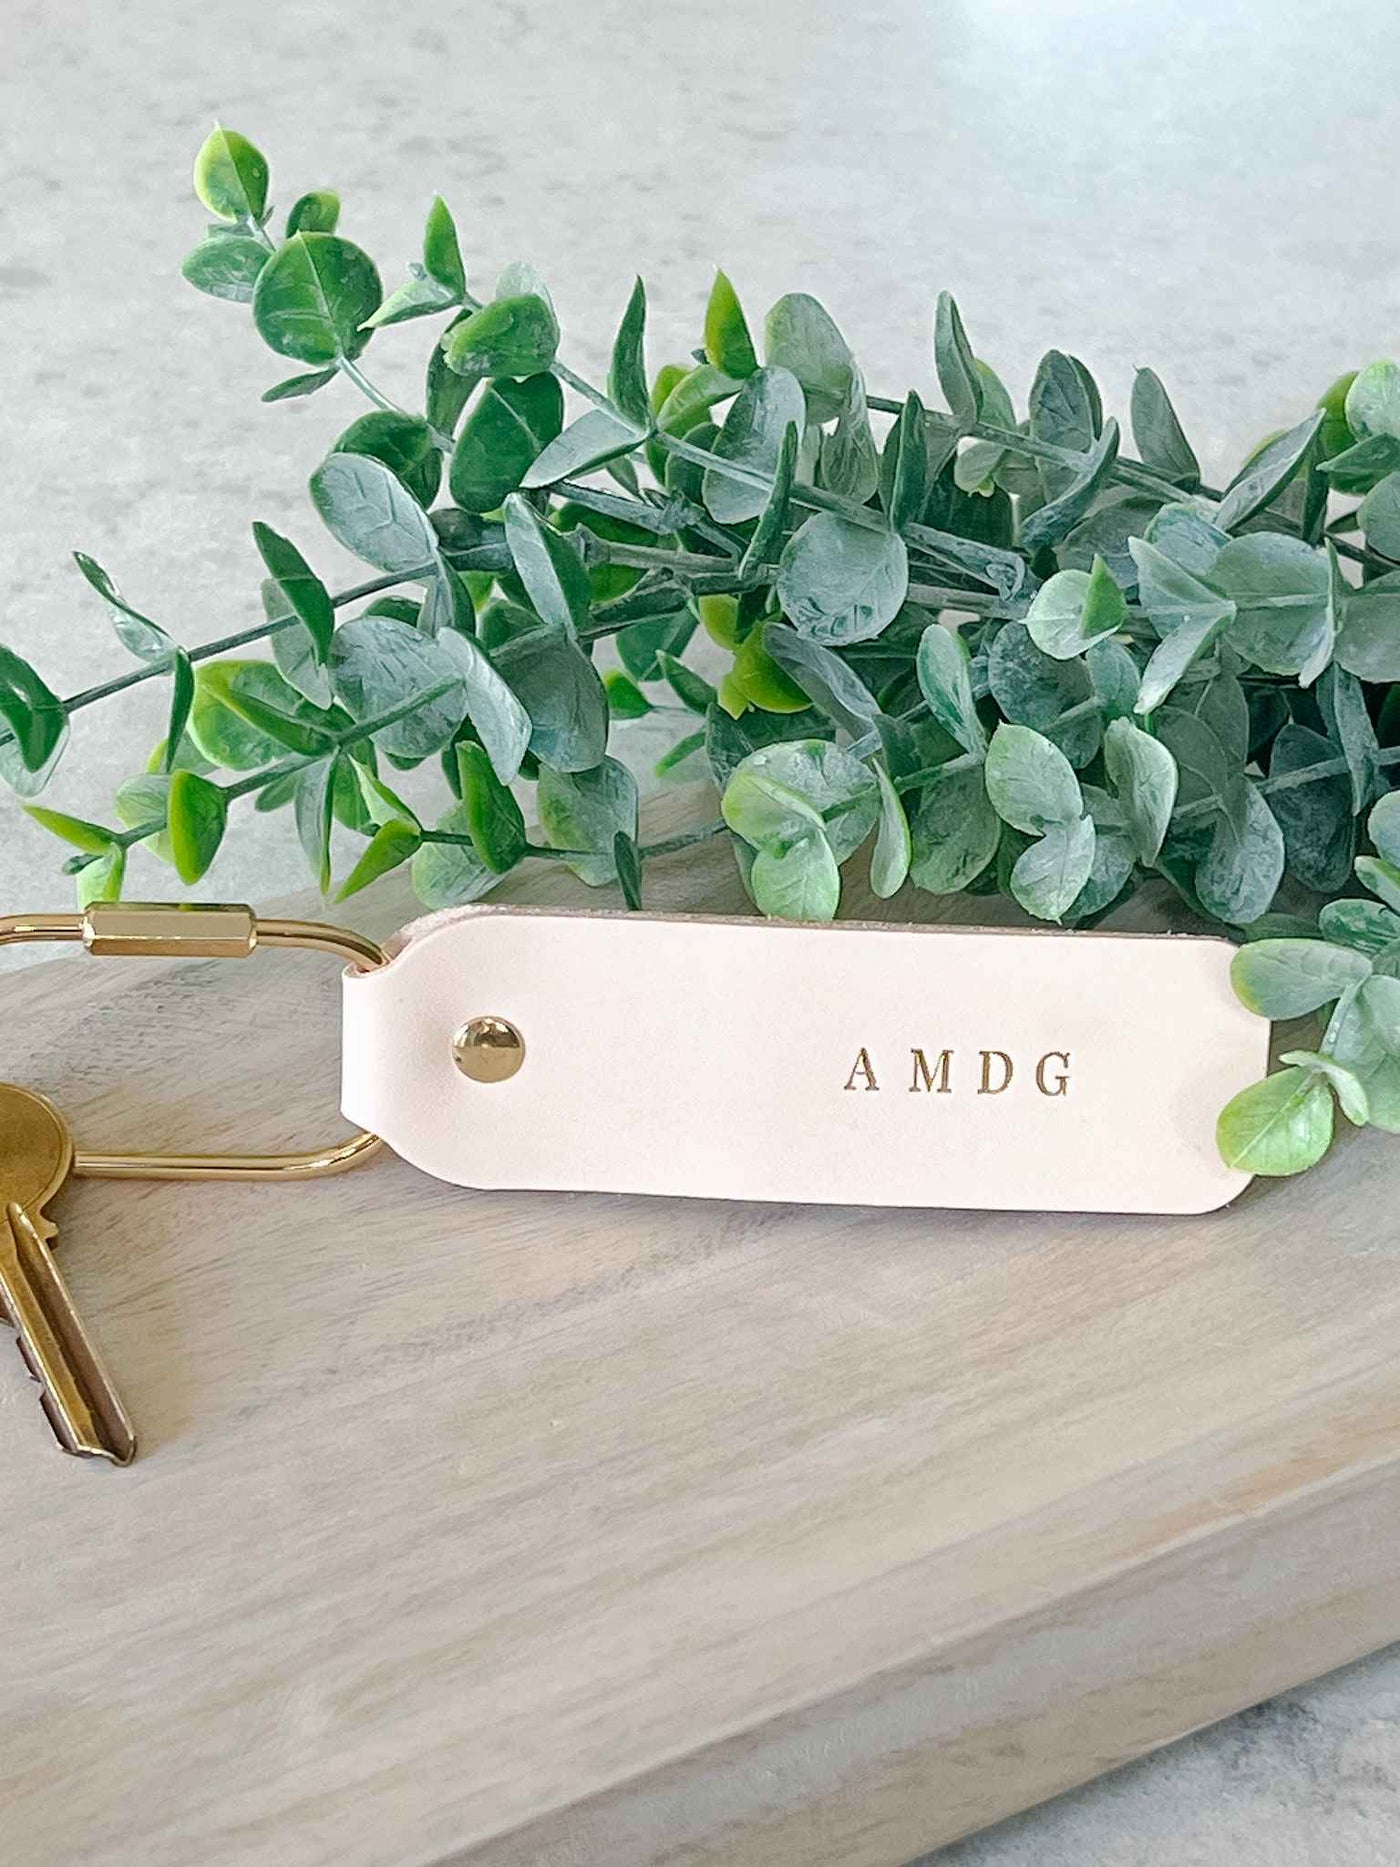 AMDG Leather Key Chain